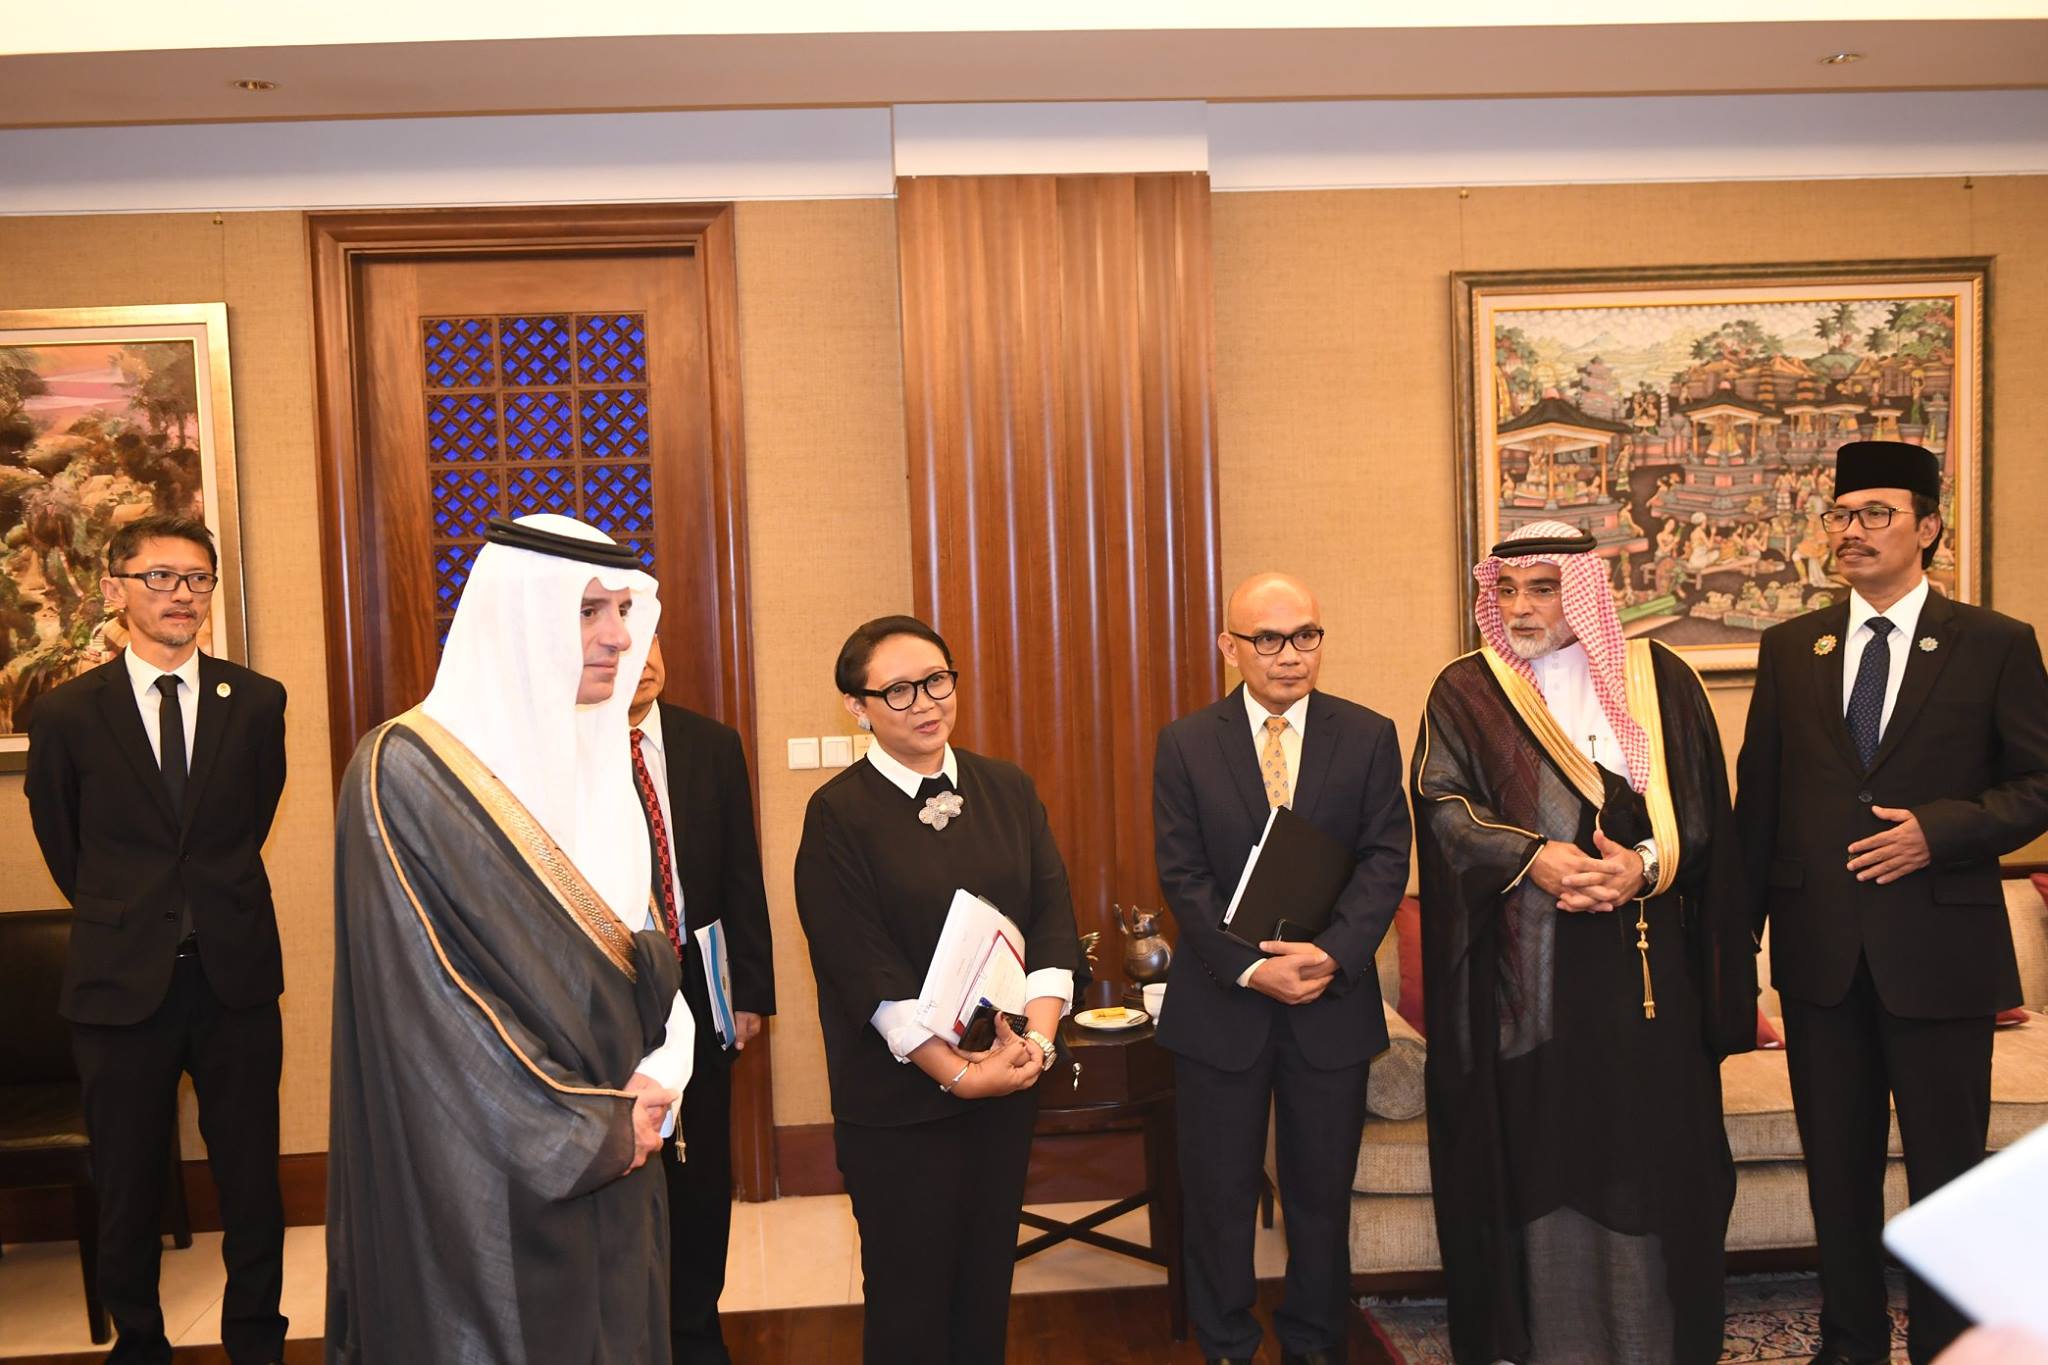 Dubes RI untuk Arab Saudi Agus Maftuh Abegebriel, dalam acara diplomasi di Makkah. (Foto: akun fb agus maftuh)